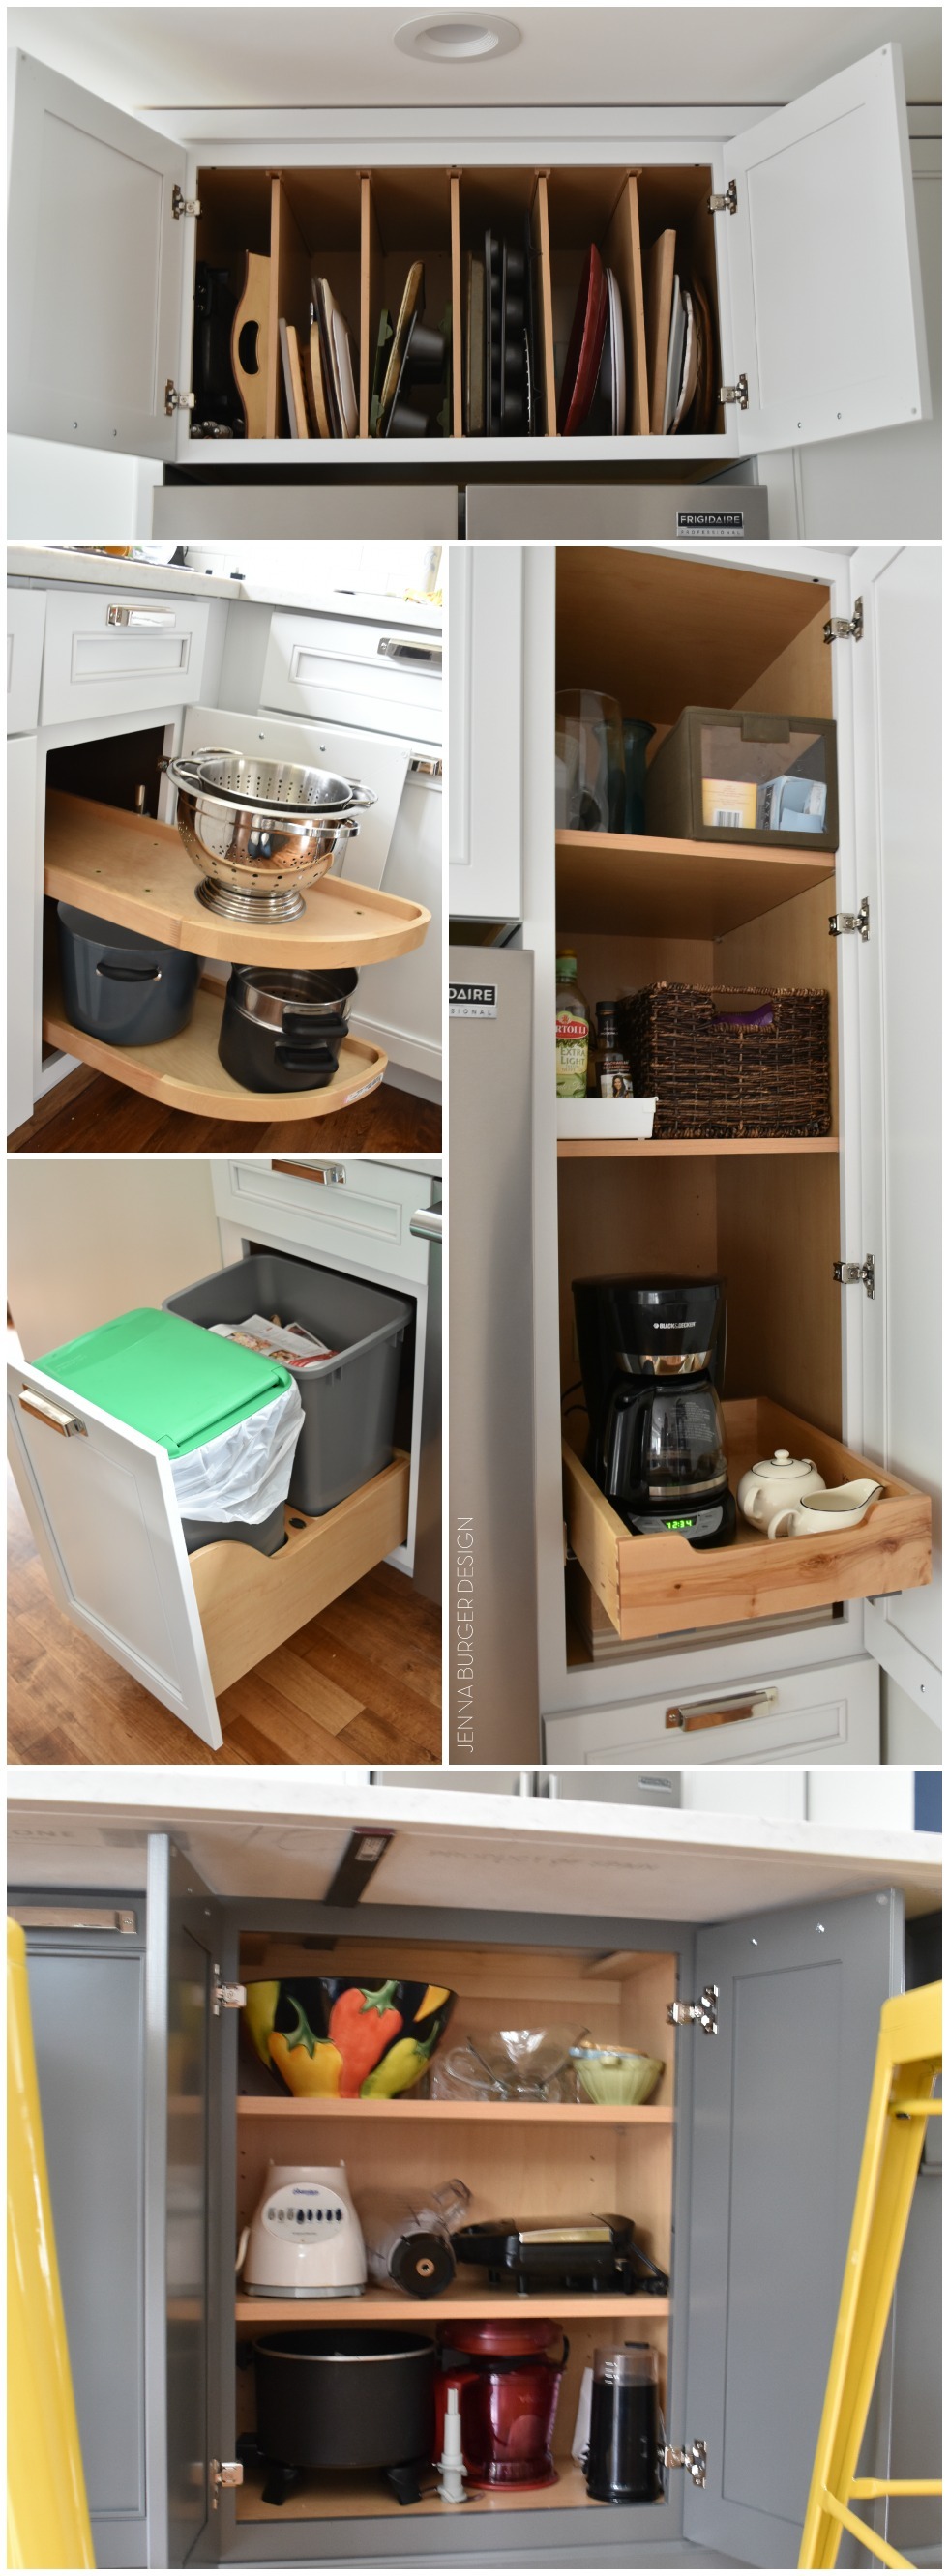 Kitchen Renovation + Cabinet Installation using Kraftmaid. Before & After @ www.jennaburger.com